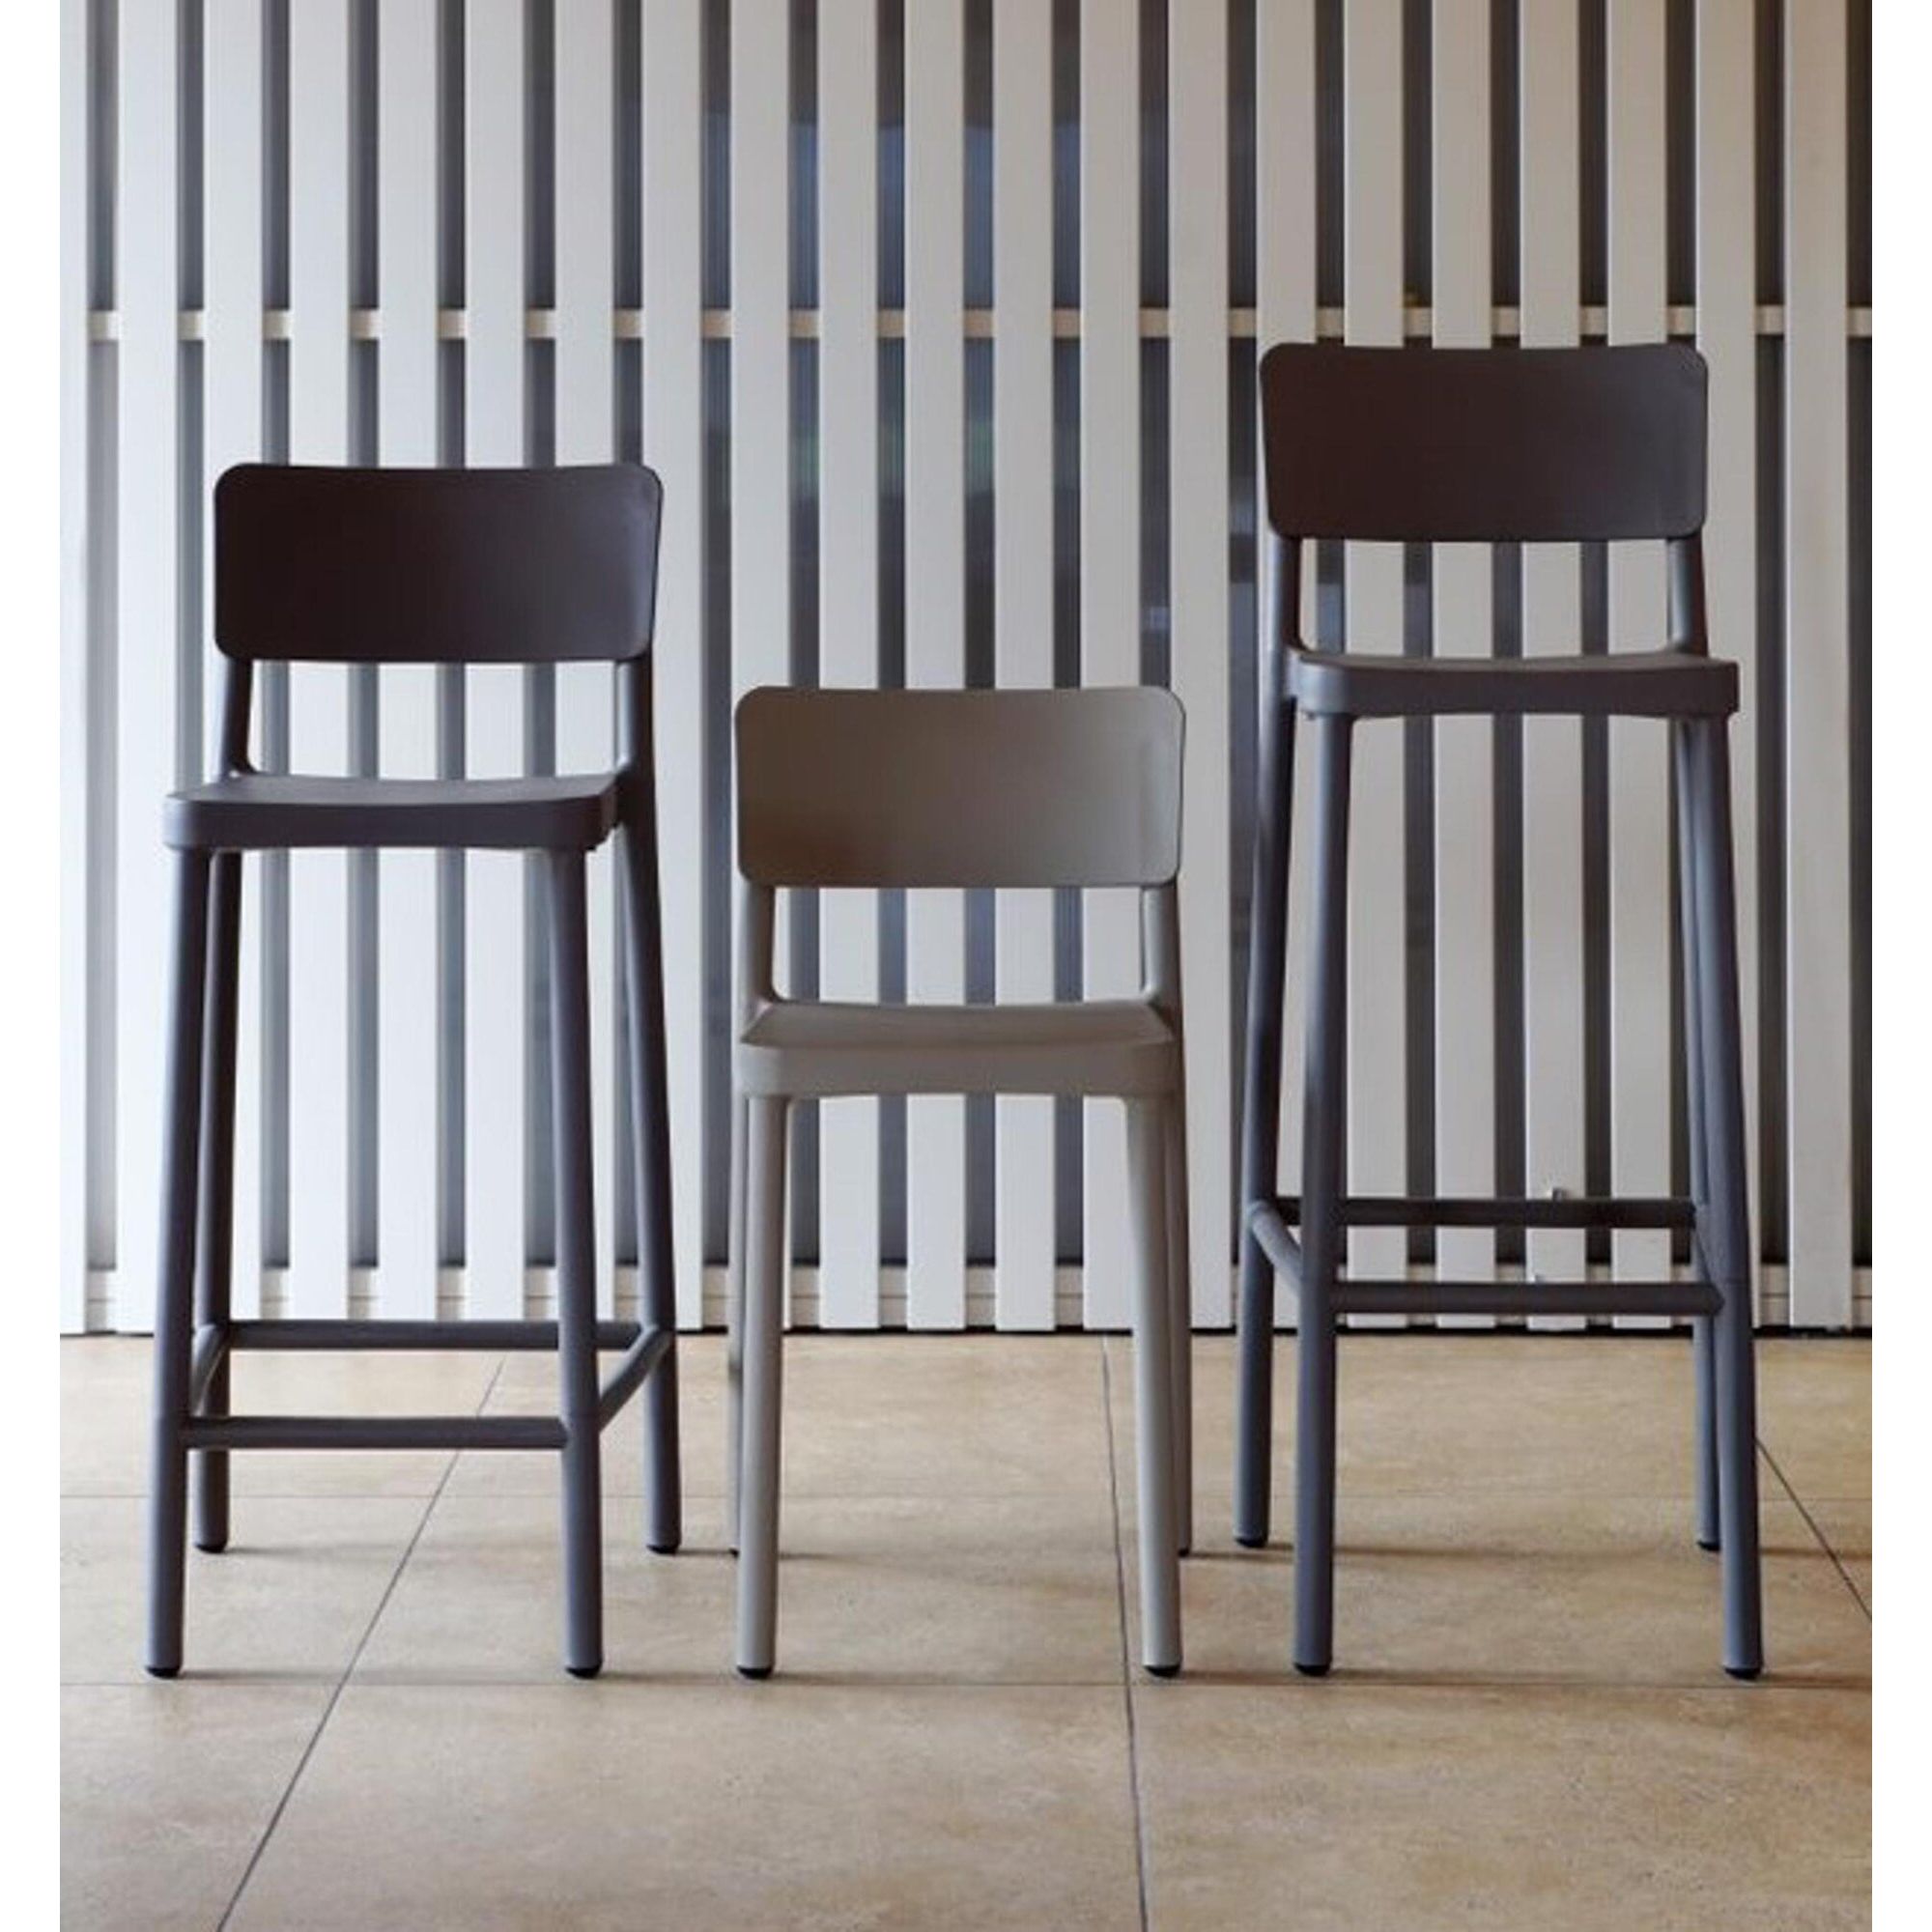 Resol lisboa high stool indoors, dark gray outdoors